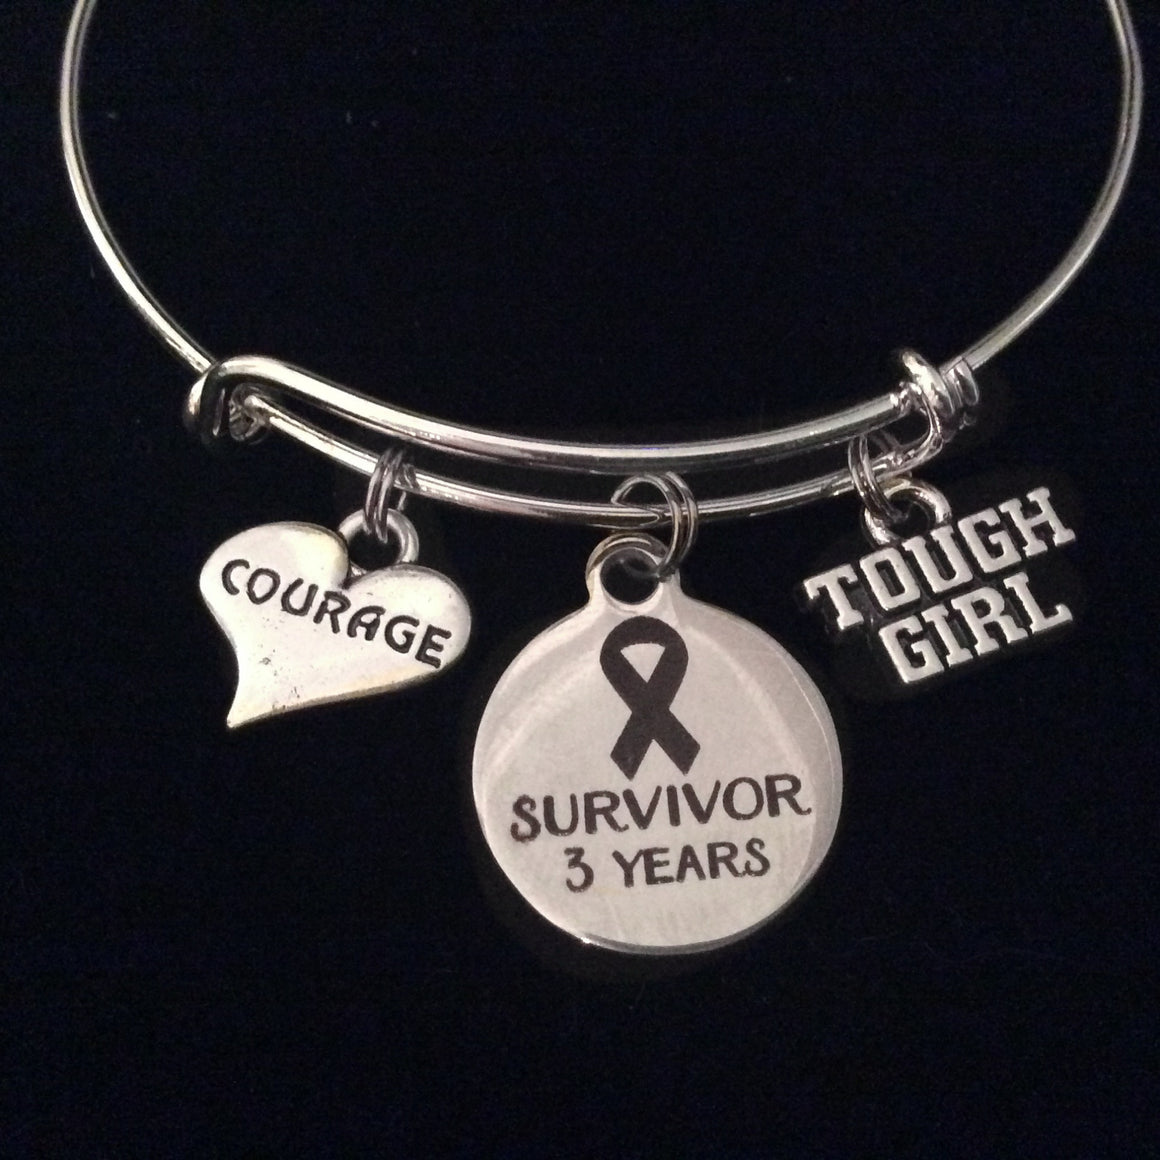 Cancer Survivor 3 Year Courage Tough Girl Expandable Silver Charm Bracelet Adjustable Bangle Gift